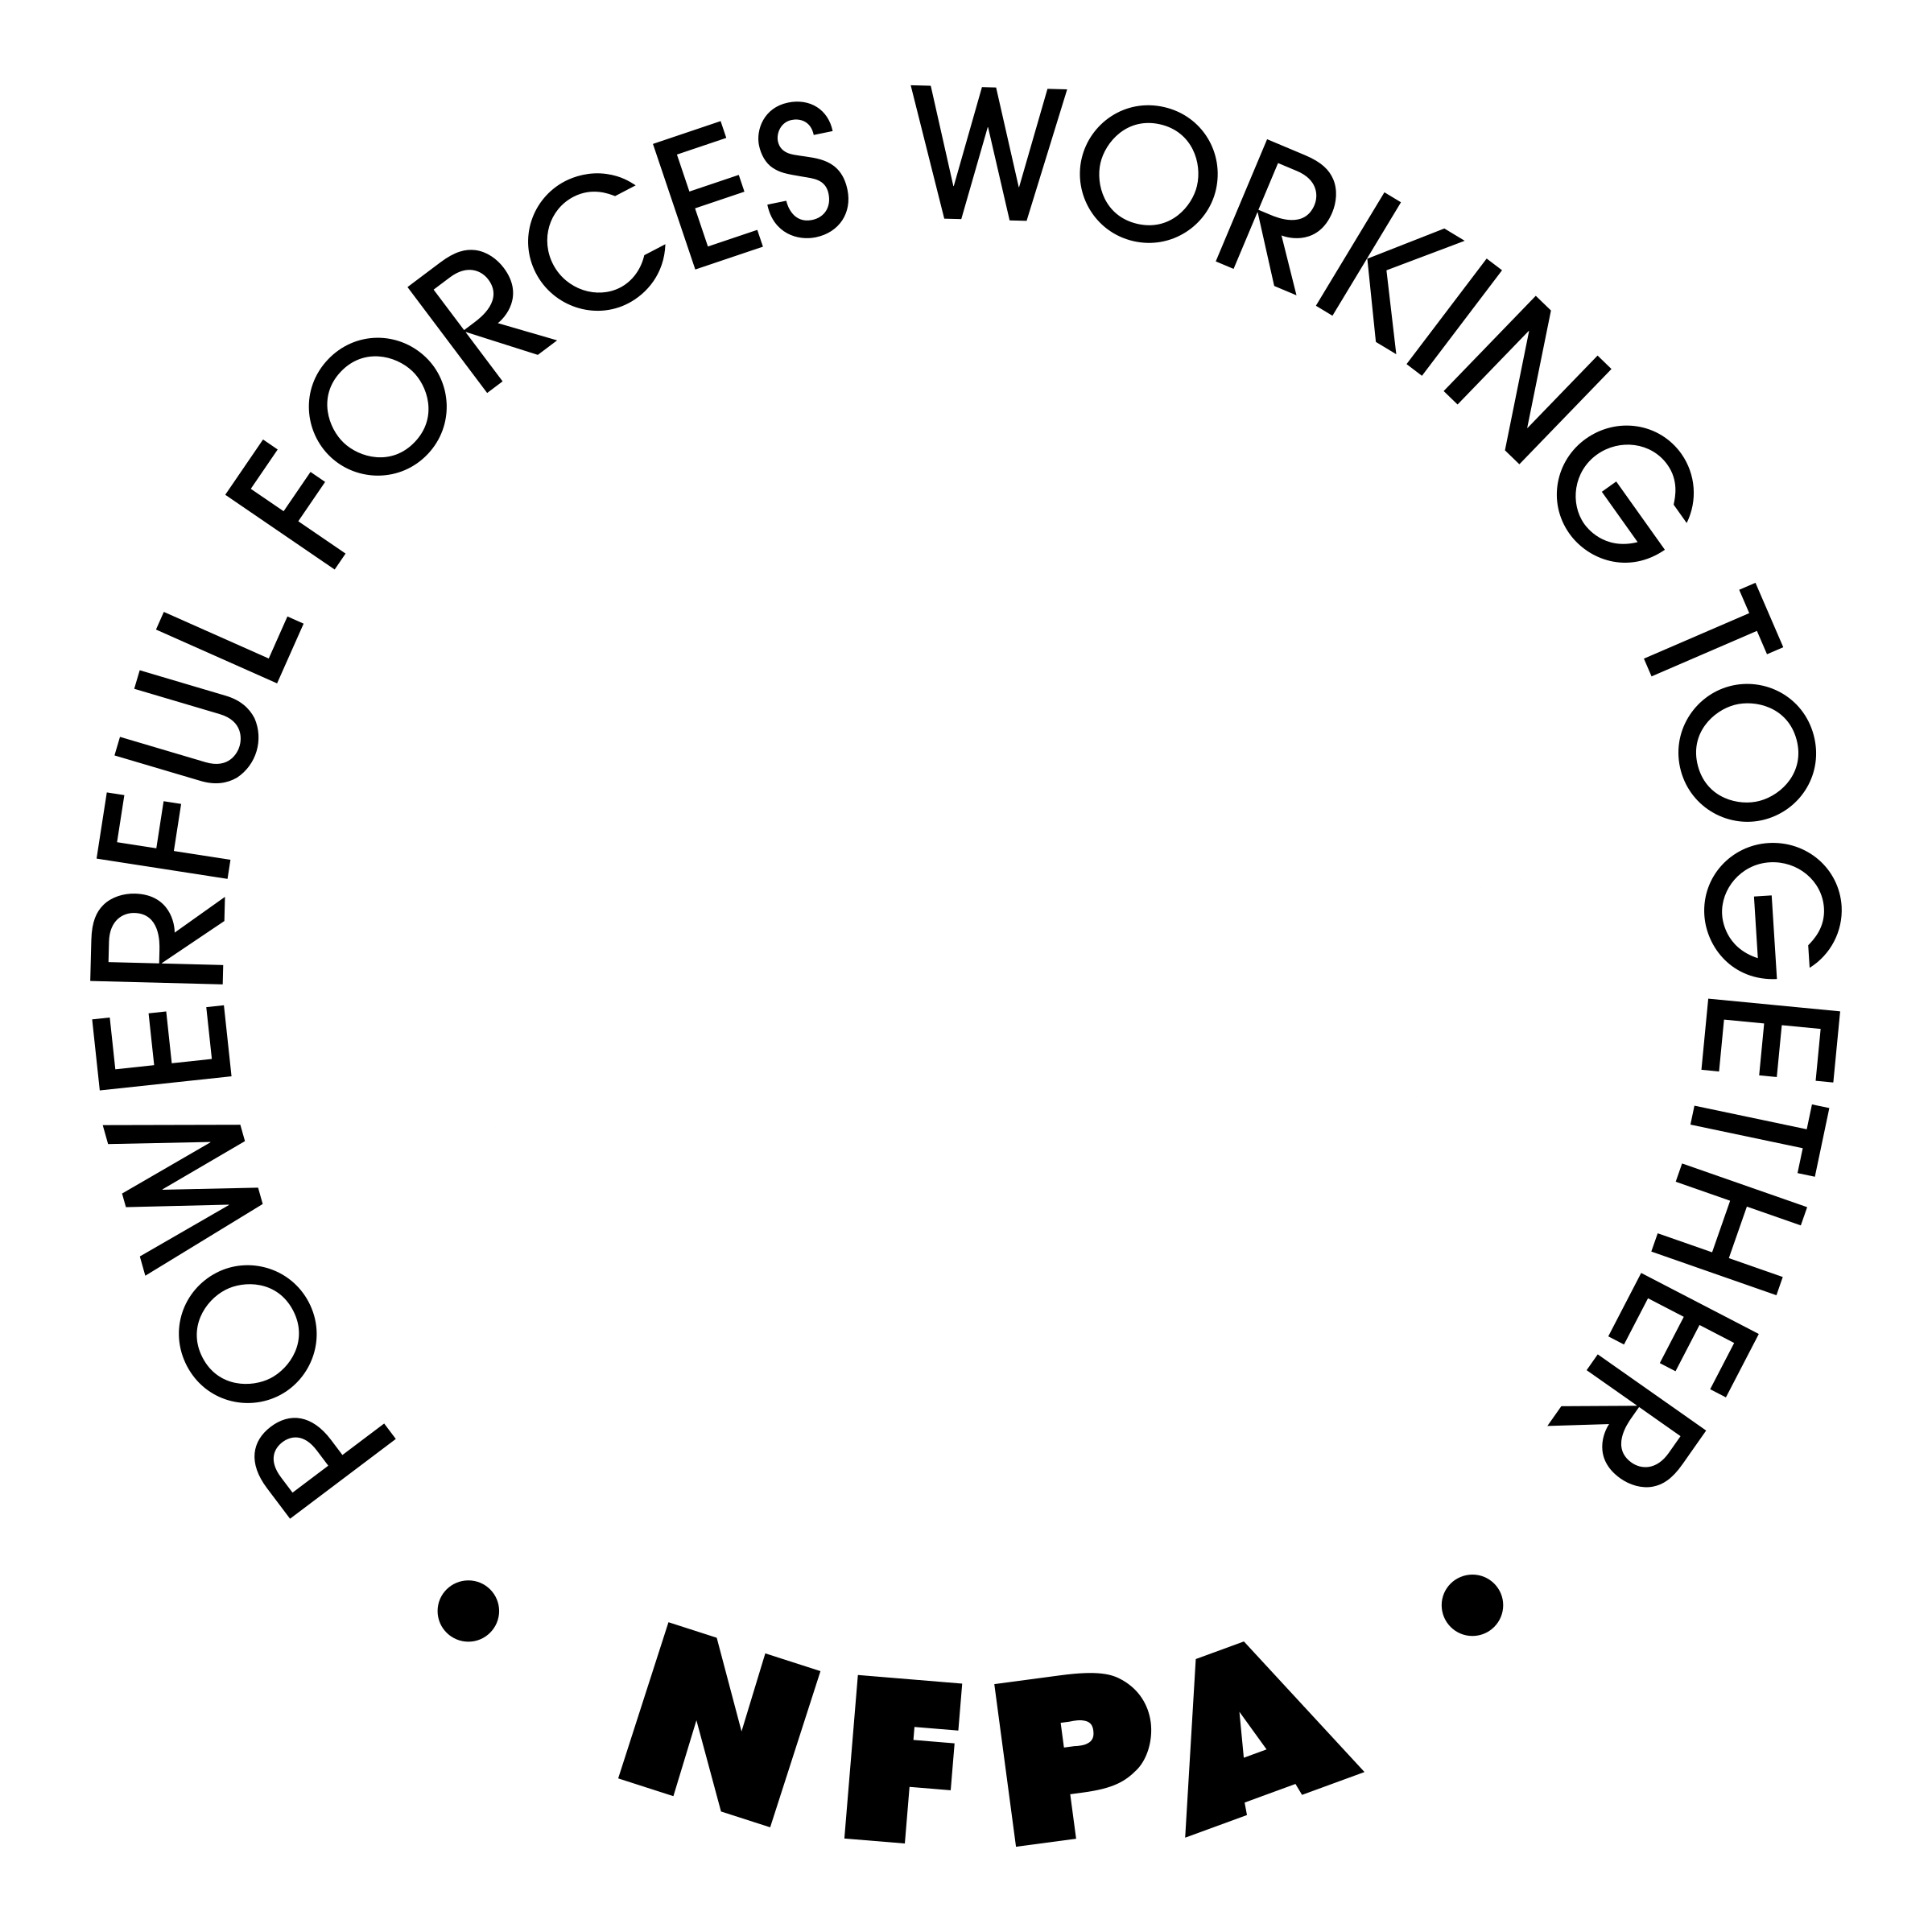 NFPA Logo - NFPA Logo PNG Transparent & SVG Vector - Freebie Supply